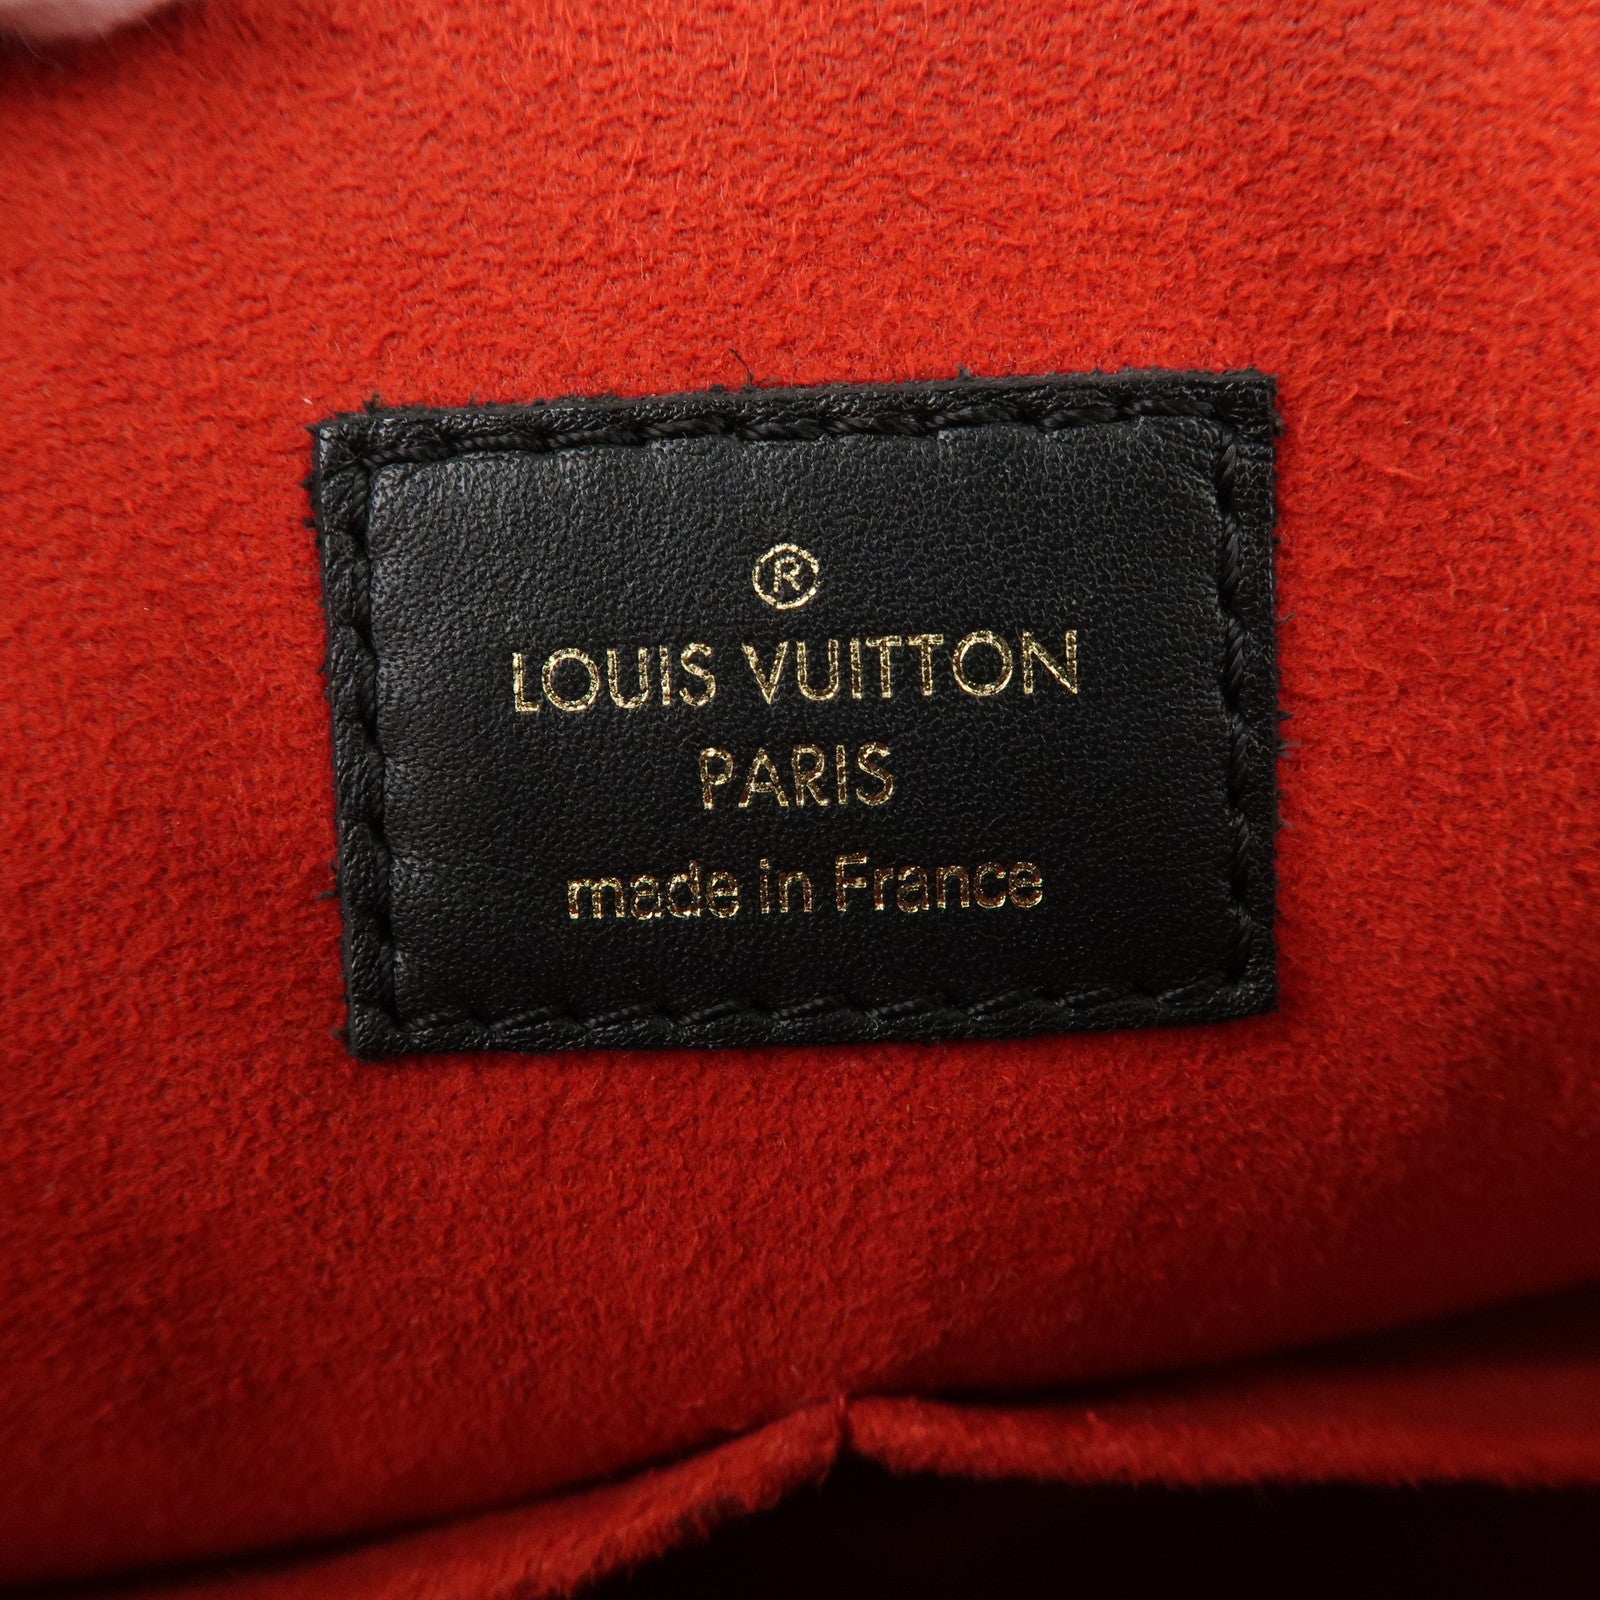 M41456 Louis Vuitton 2017 Monogram Tuileries Handbag- Caramel